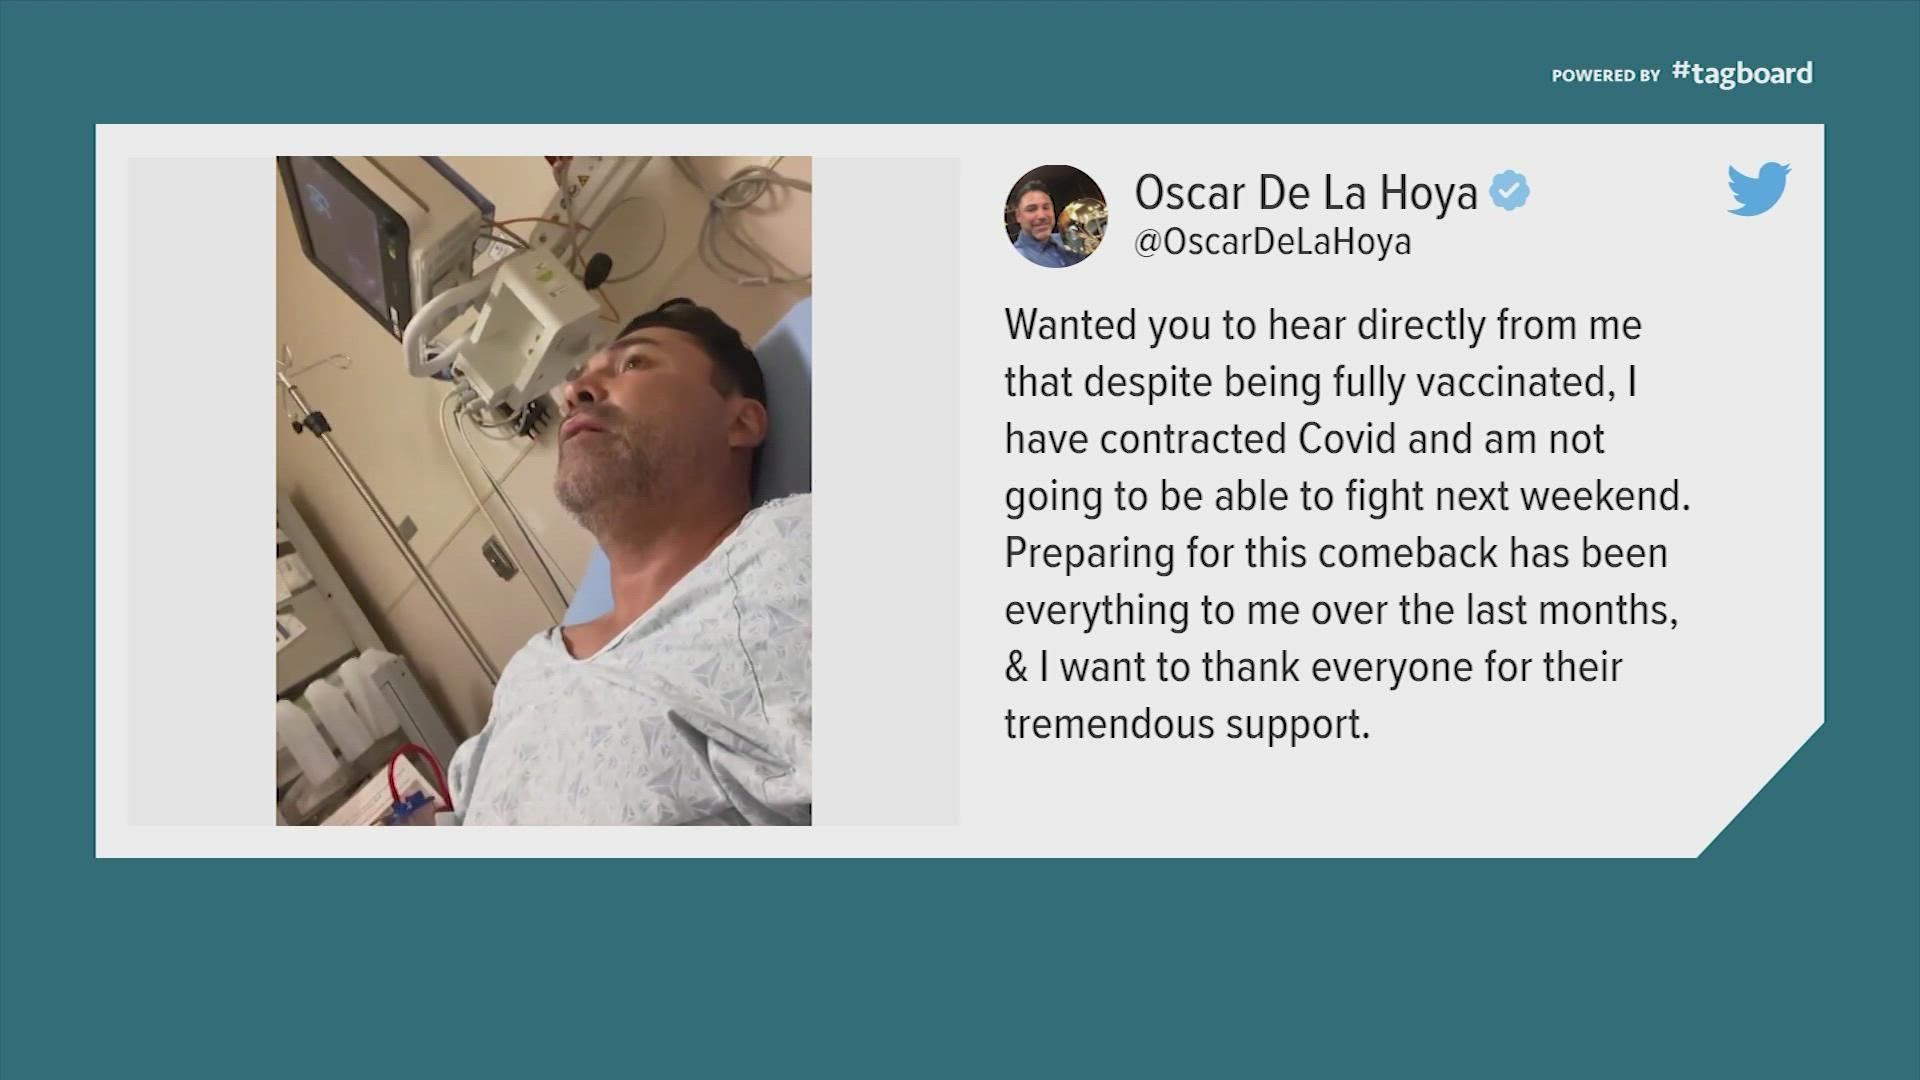 Oscar De La Hoya posted video from a hospital room, saying he has COVID.